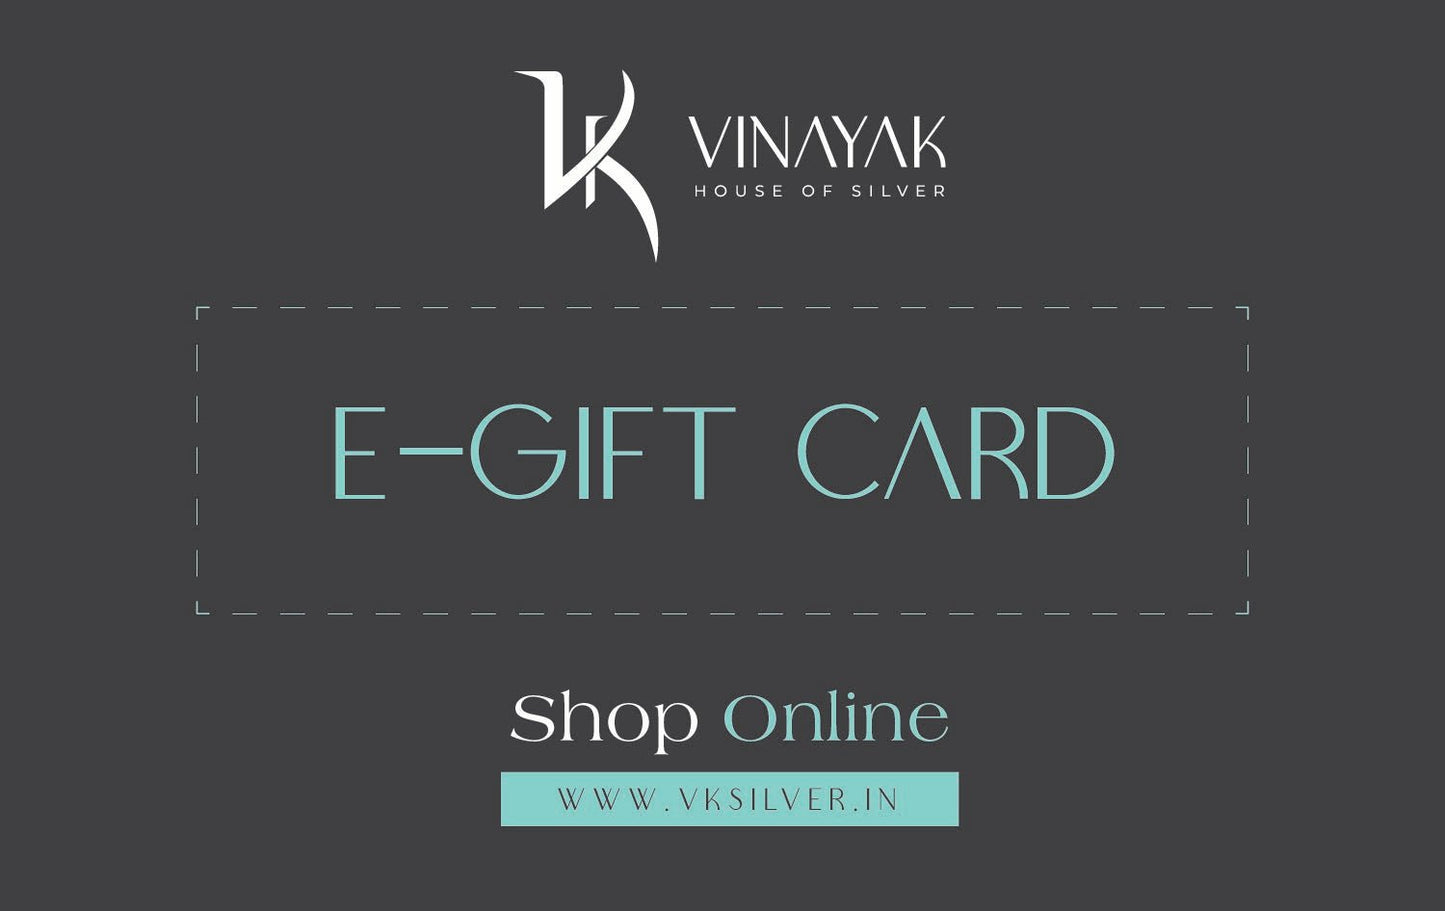 VK Silver E-Gift Card - Vinayak - House of Silver